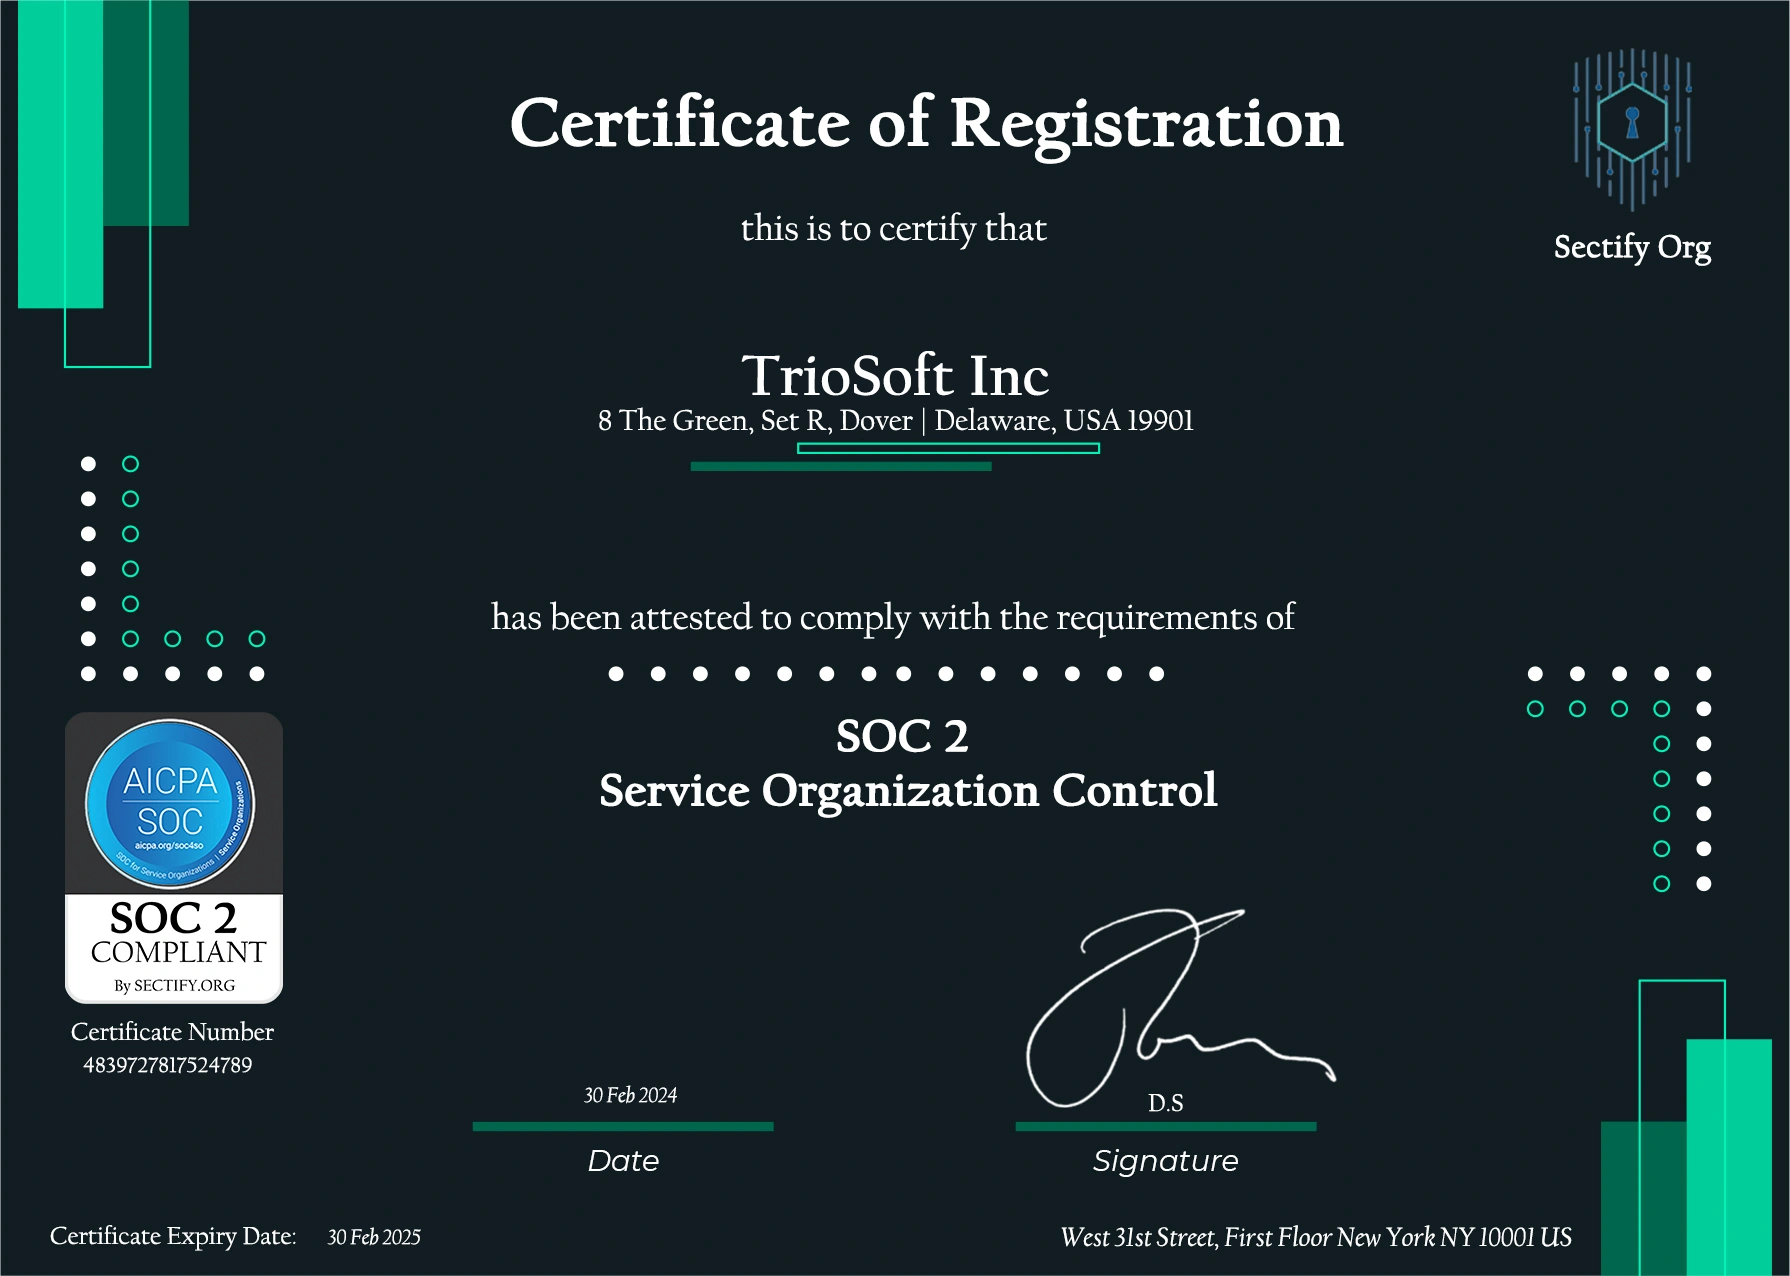 Trio's SOC2 certificate